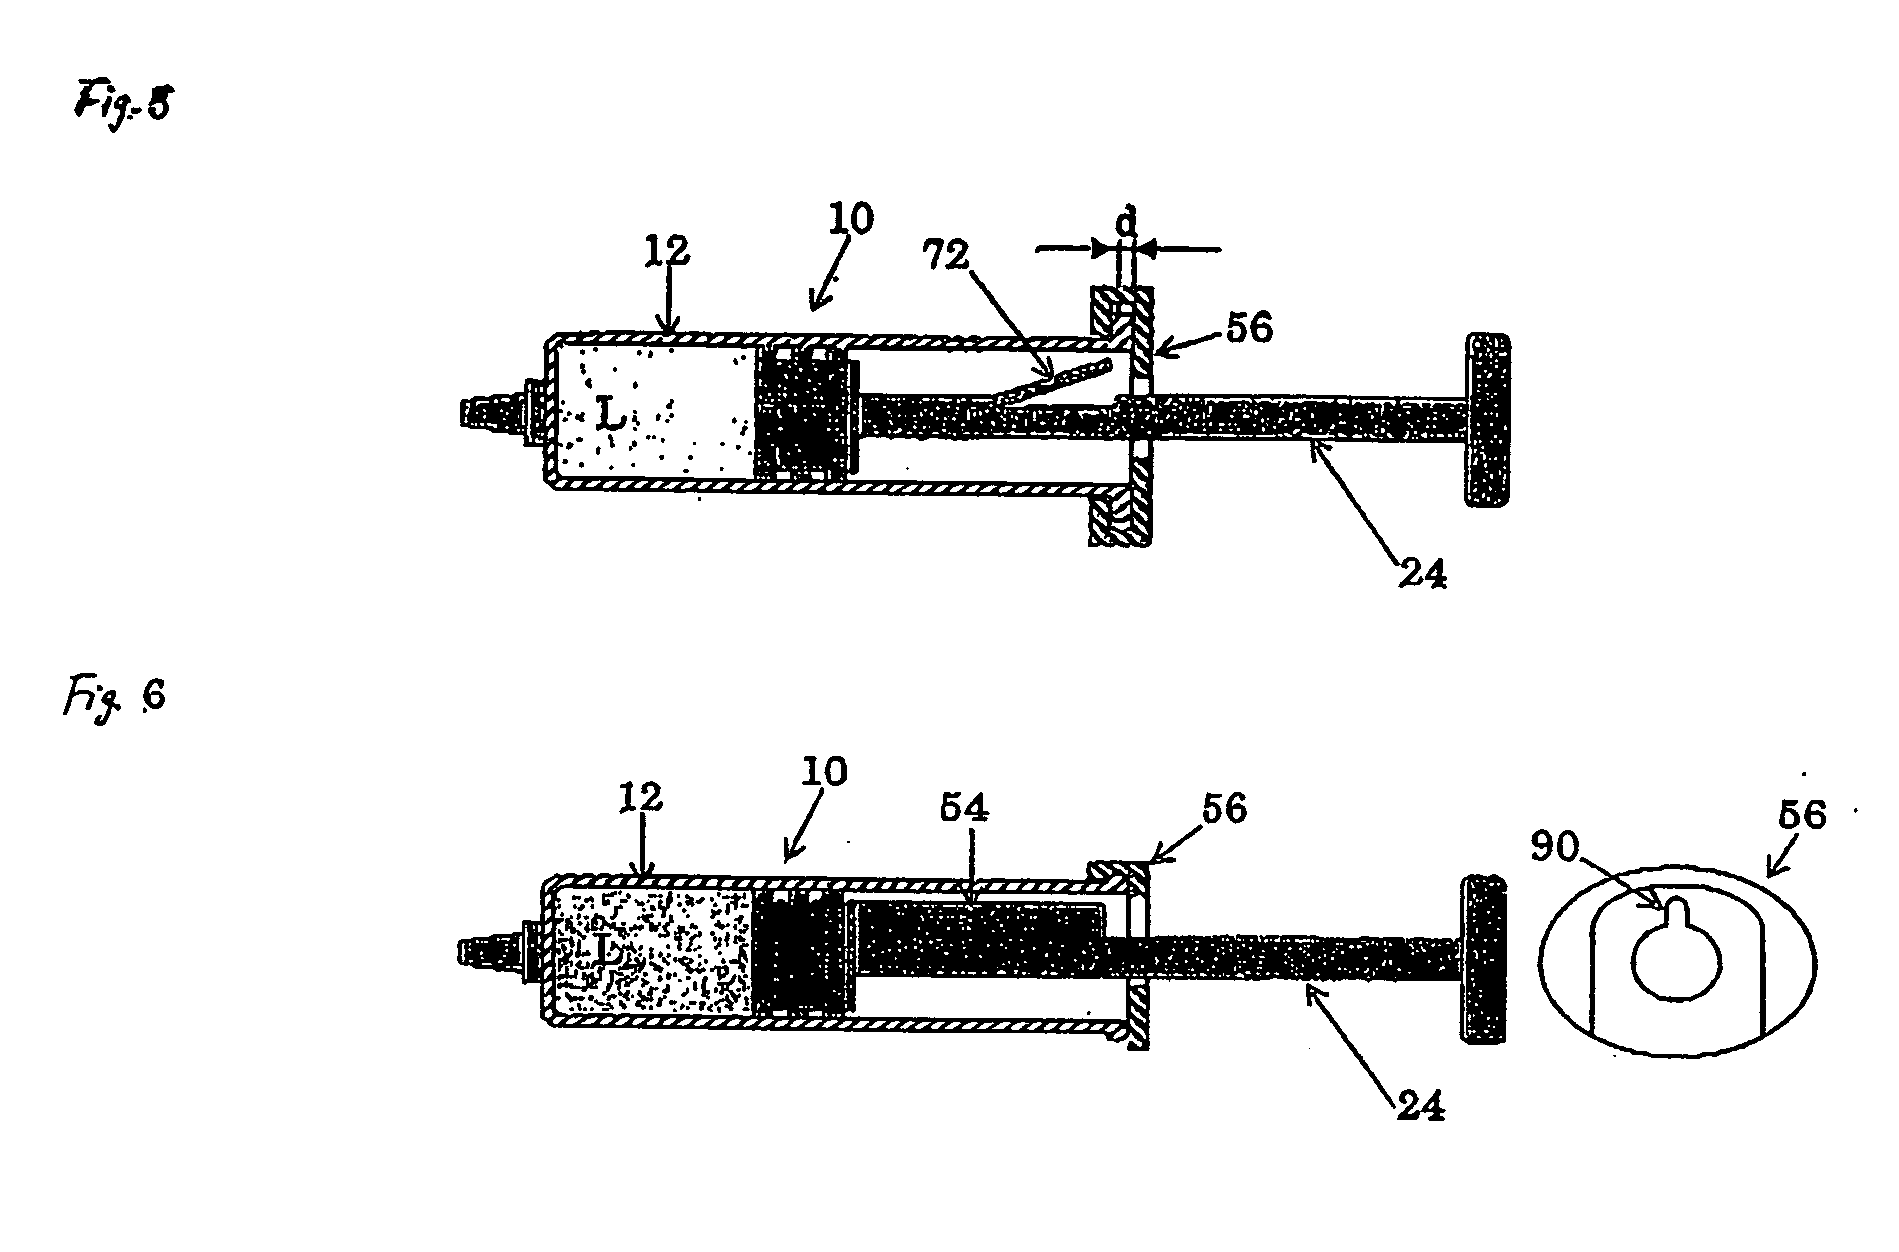 Prefilled syringe with plunger backward movement limiting mechanism